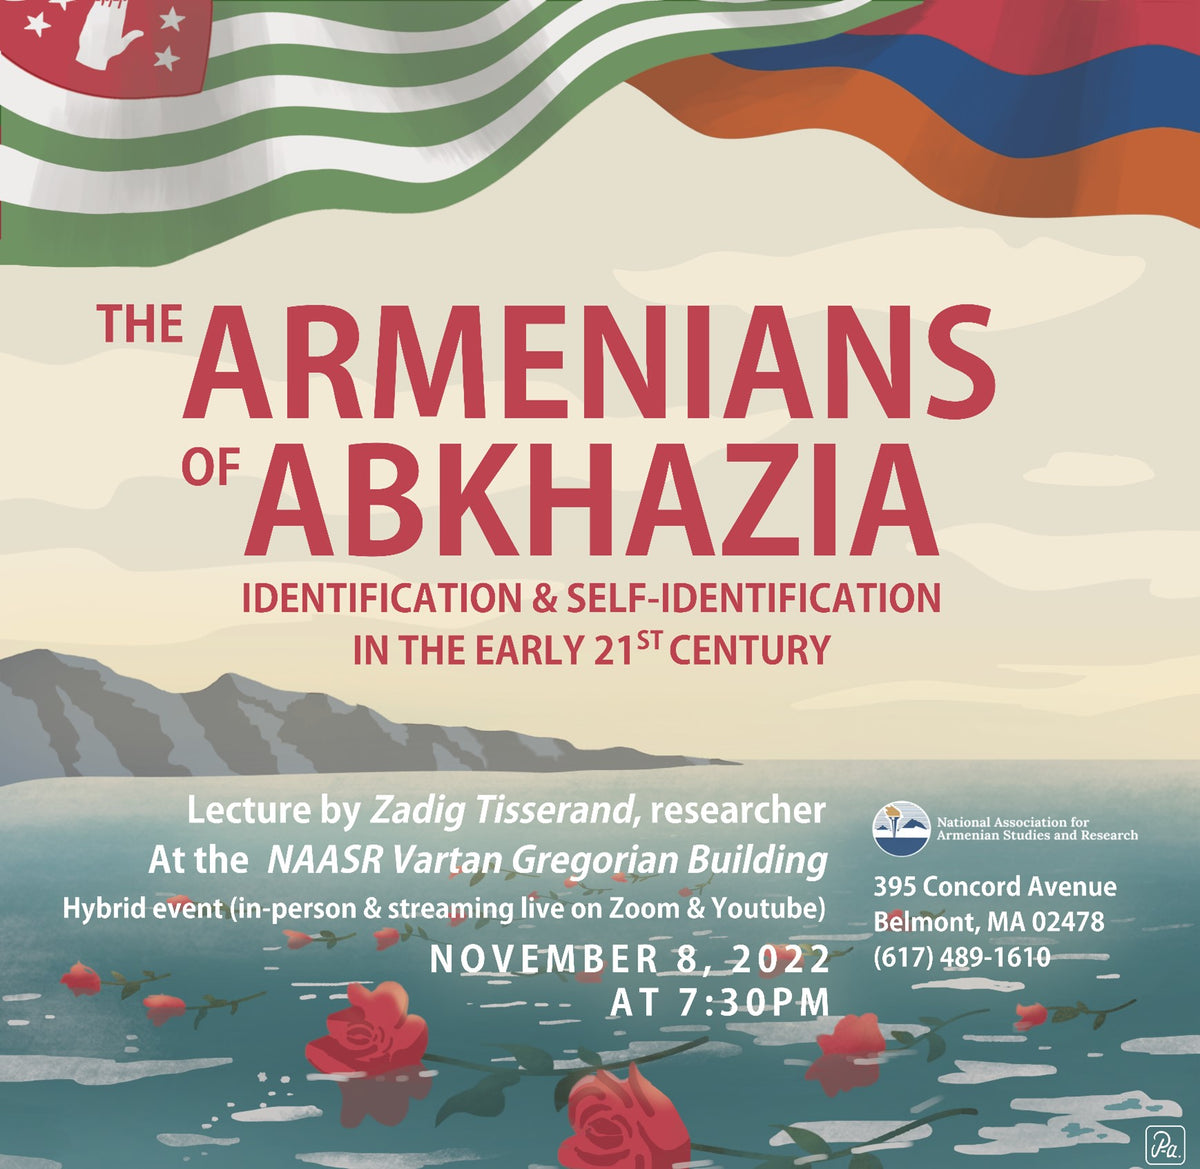 Zarmanazan' 2022: Western Armenian Language Program Registration Now Open –